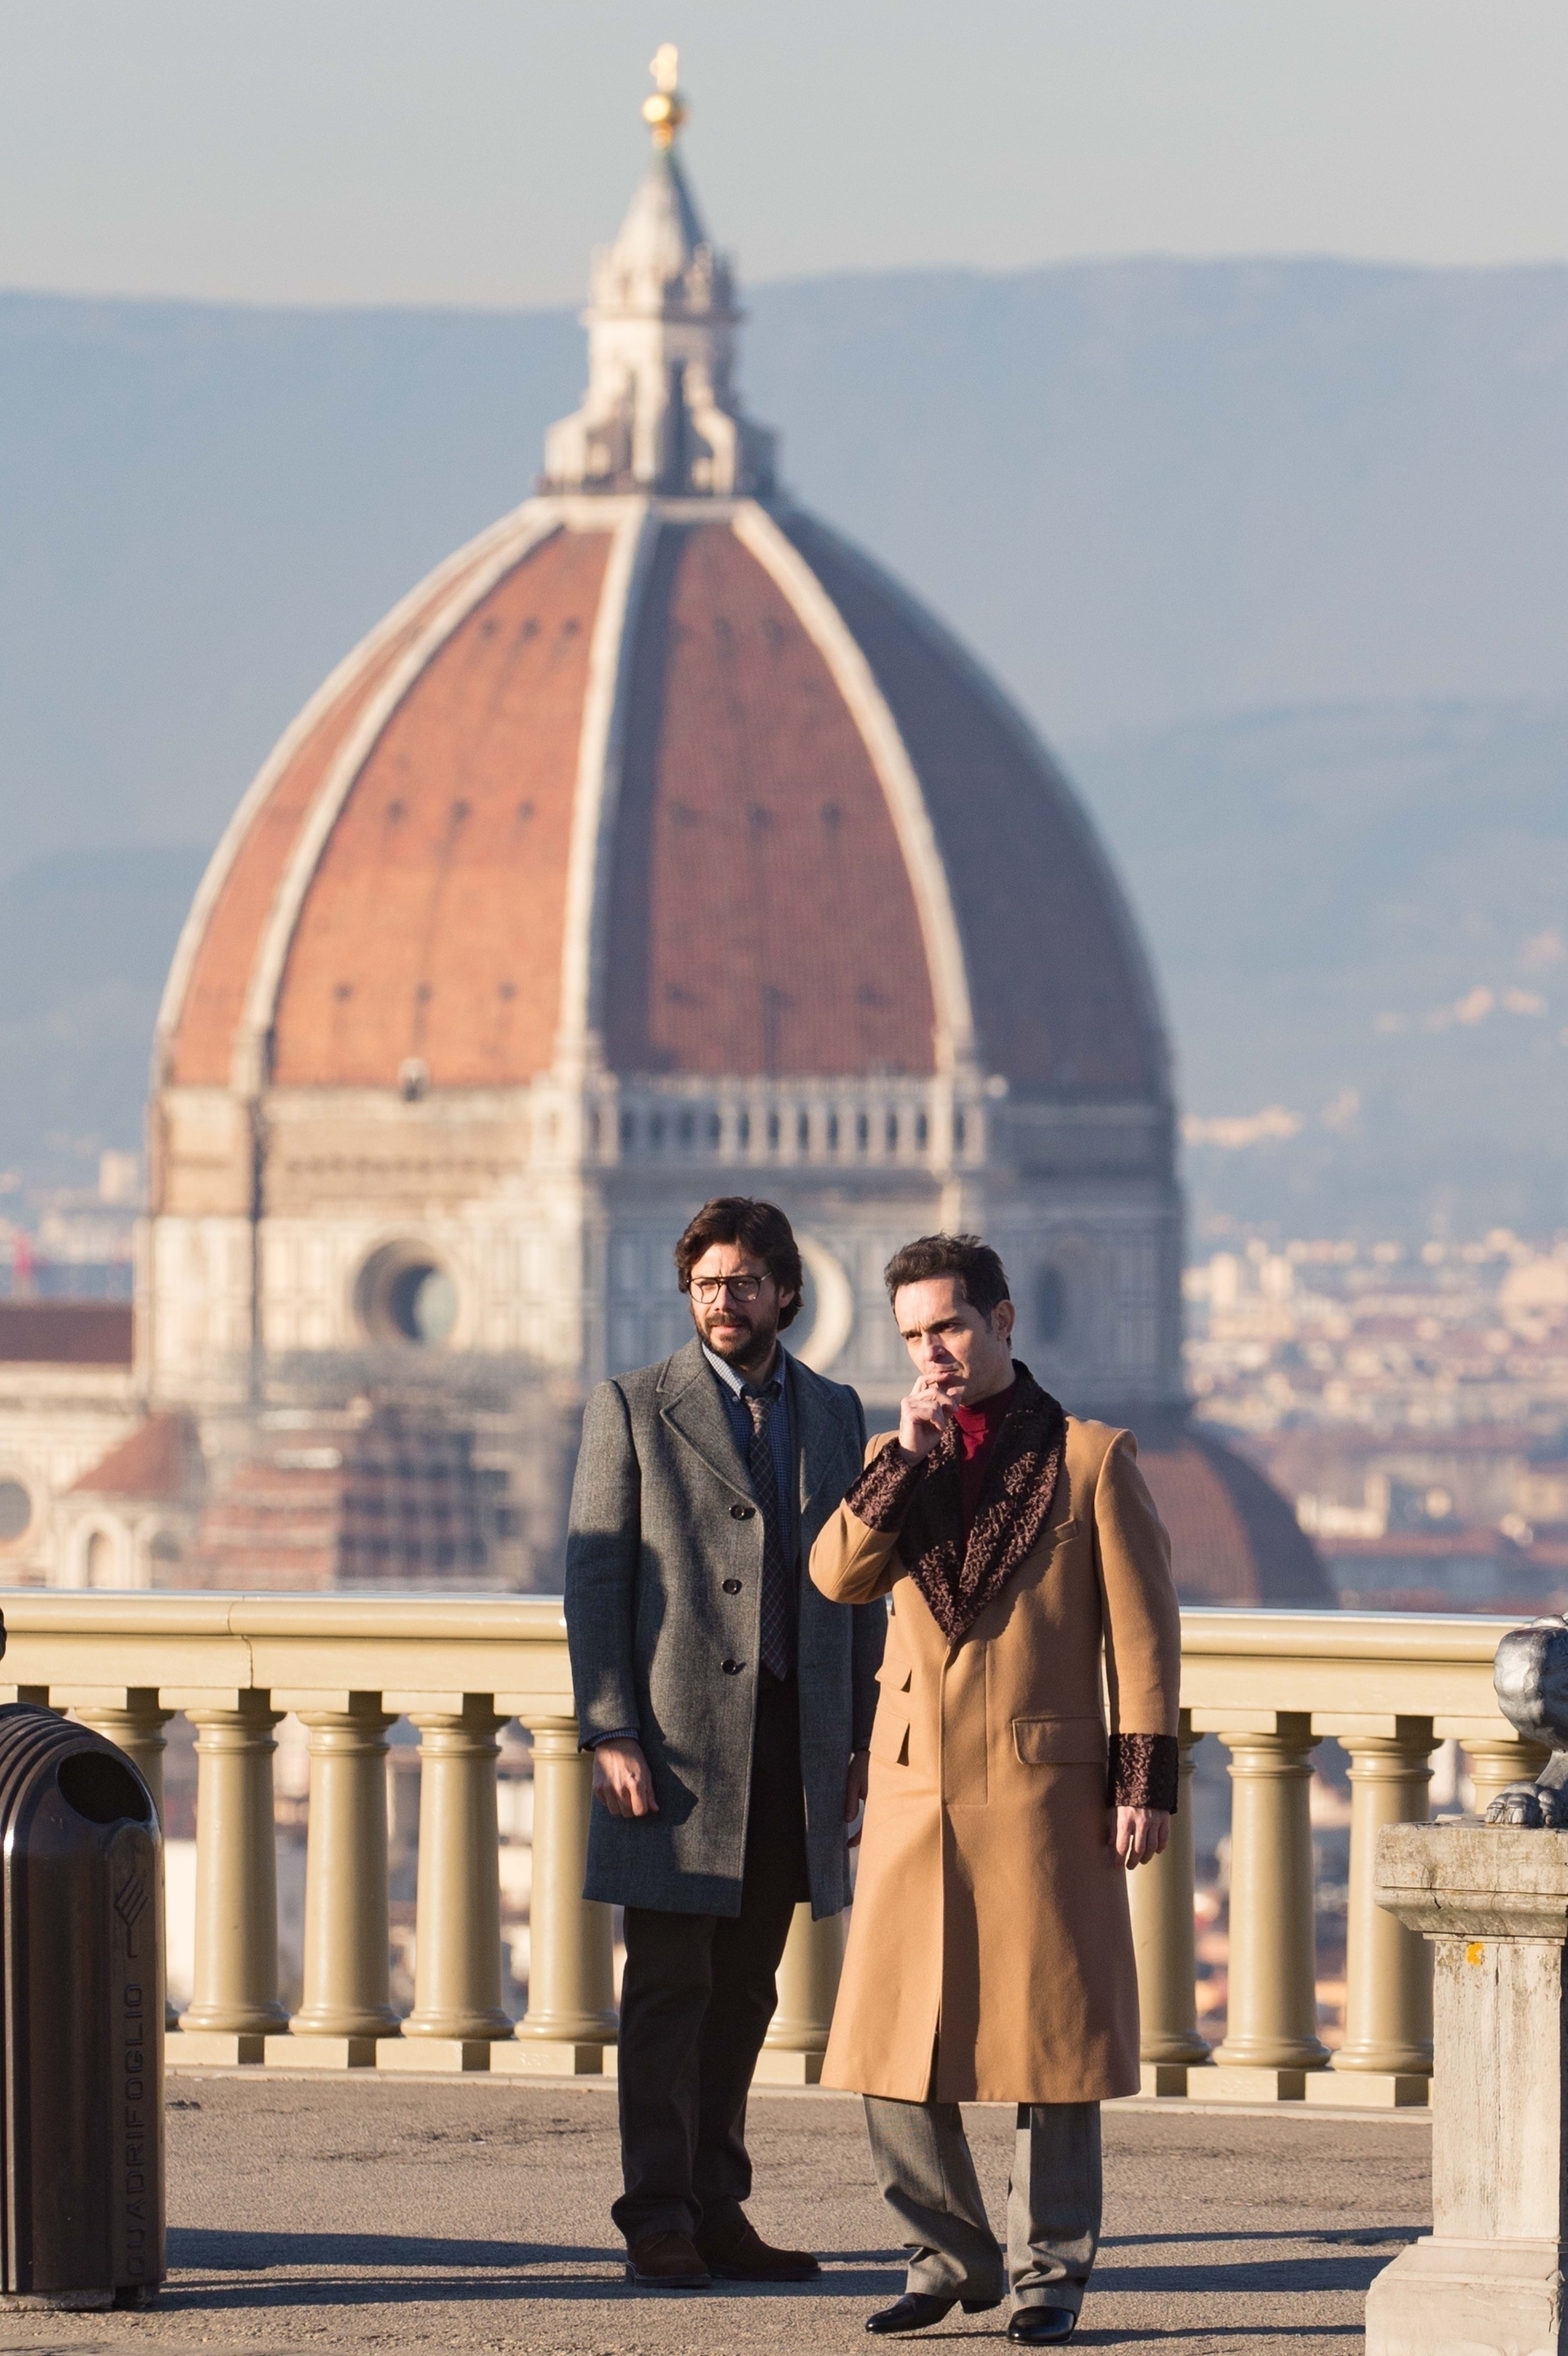 The cast of ‘La Casa De Papel’ is seen filming in Florence